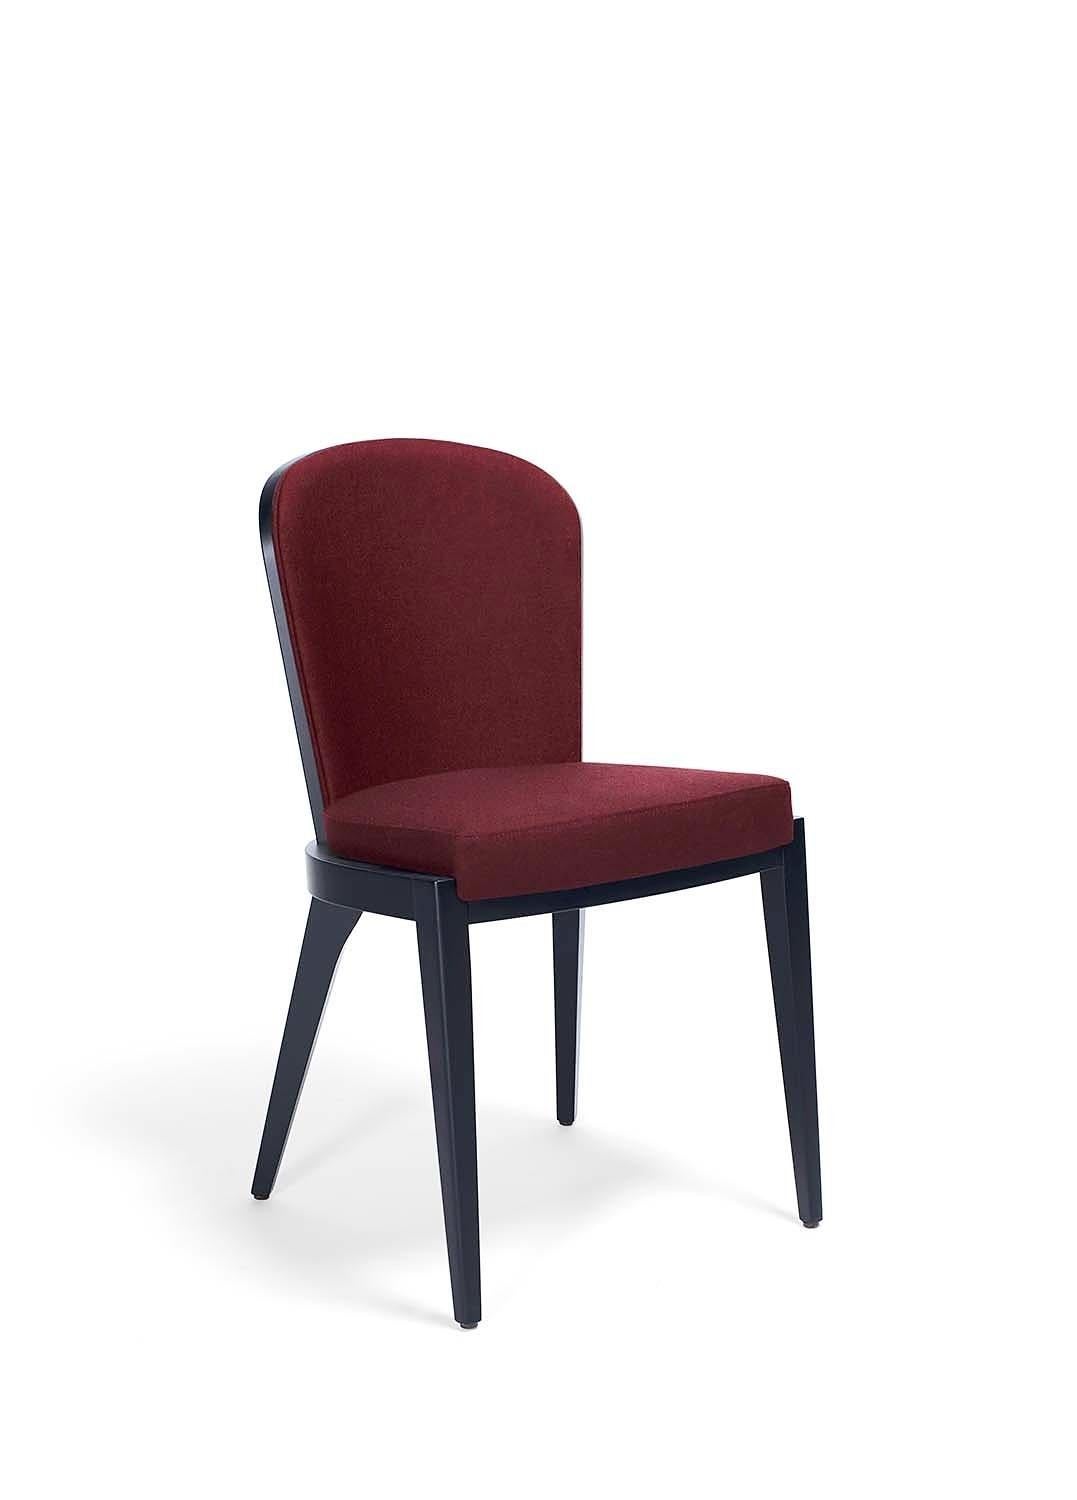 italian dining chairs modern